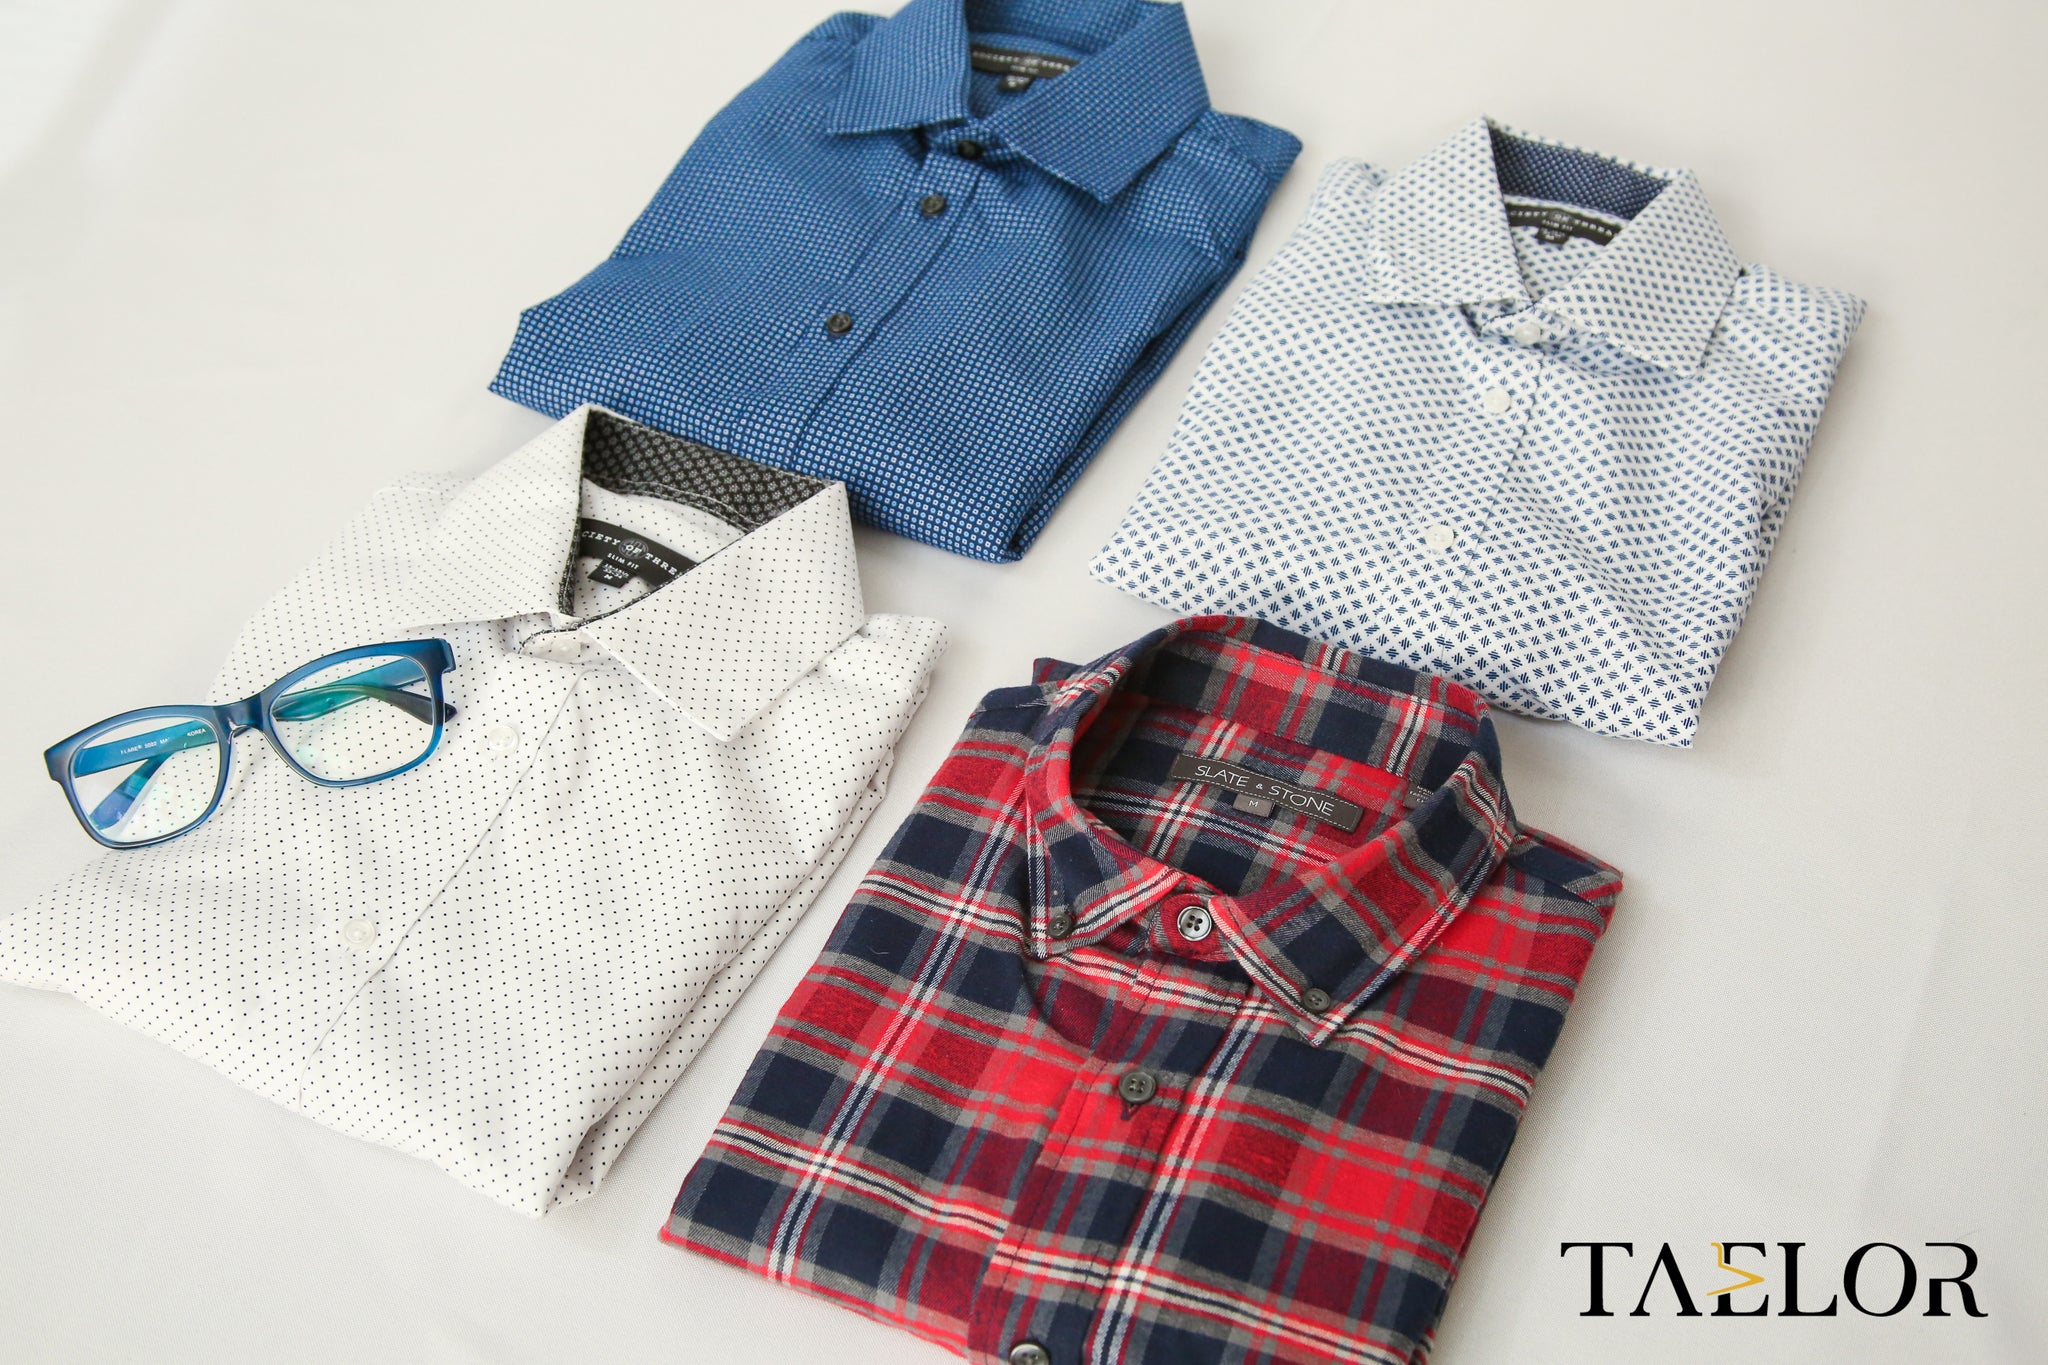 Taelor menswear rental subscription shirt collection